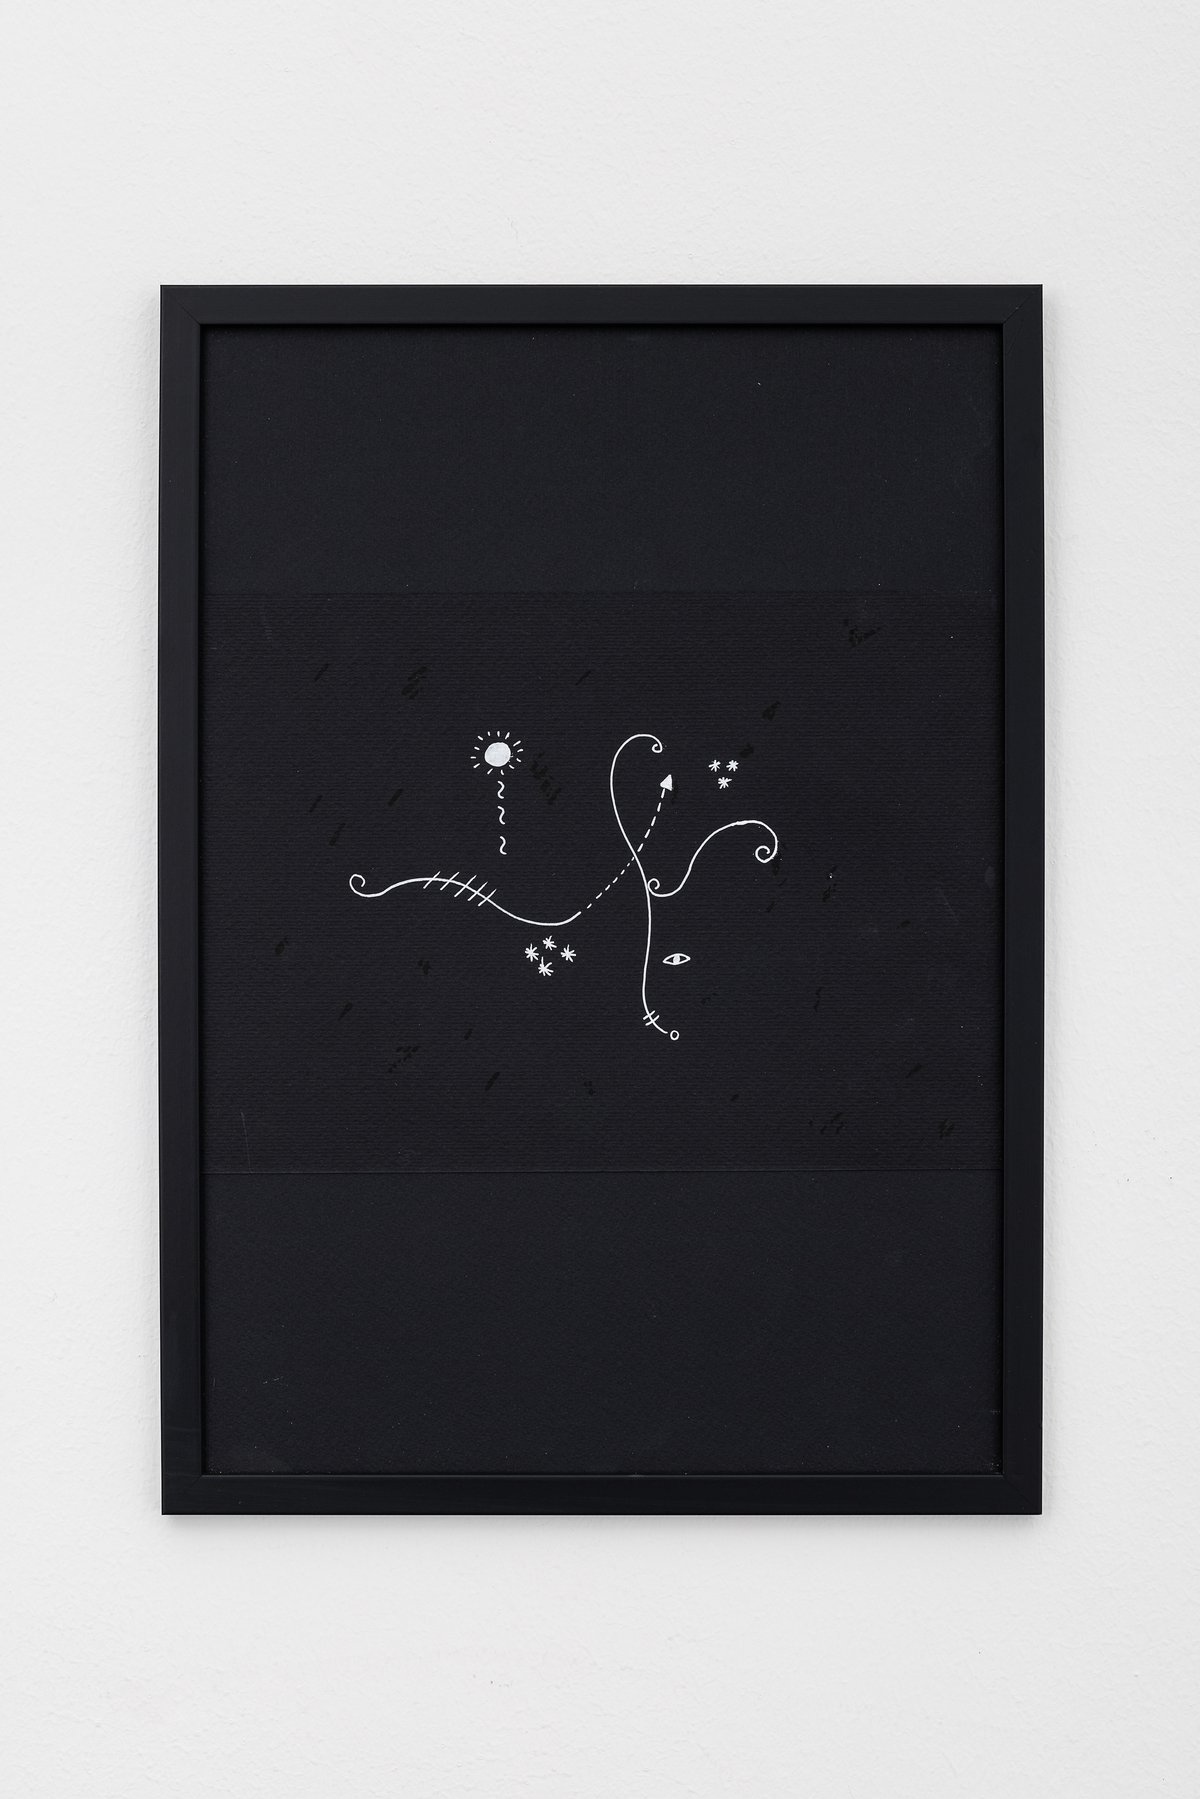 Melika Ngombe Kolongo, Crossroads #01, 2022, Acrylic pen on paper, 42 x 29,7 cm (framed)